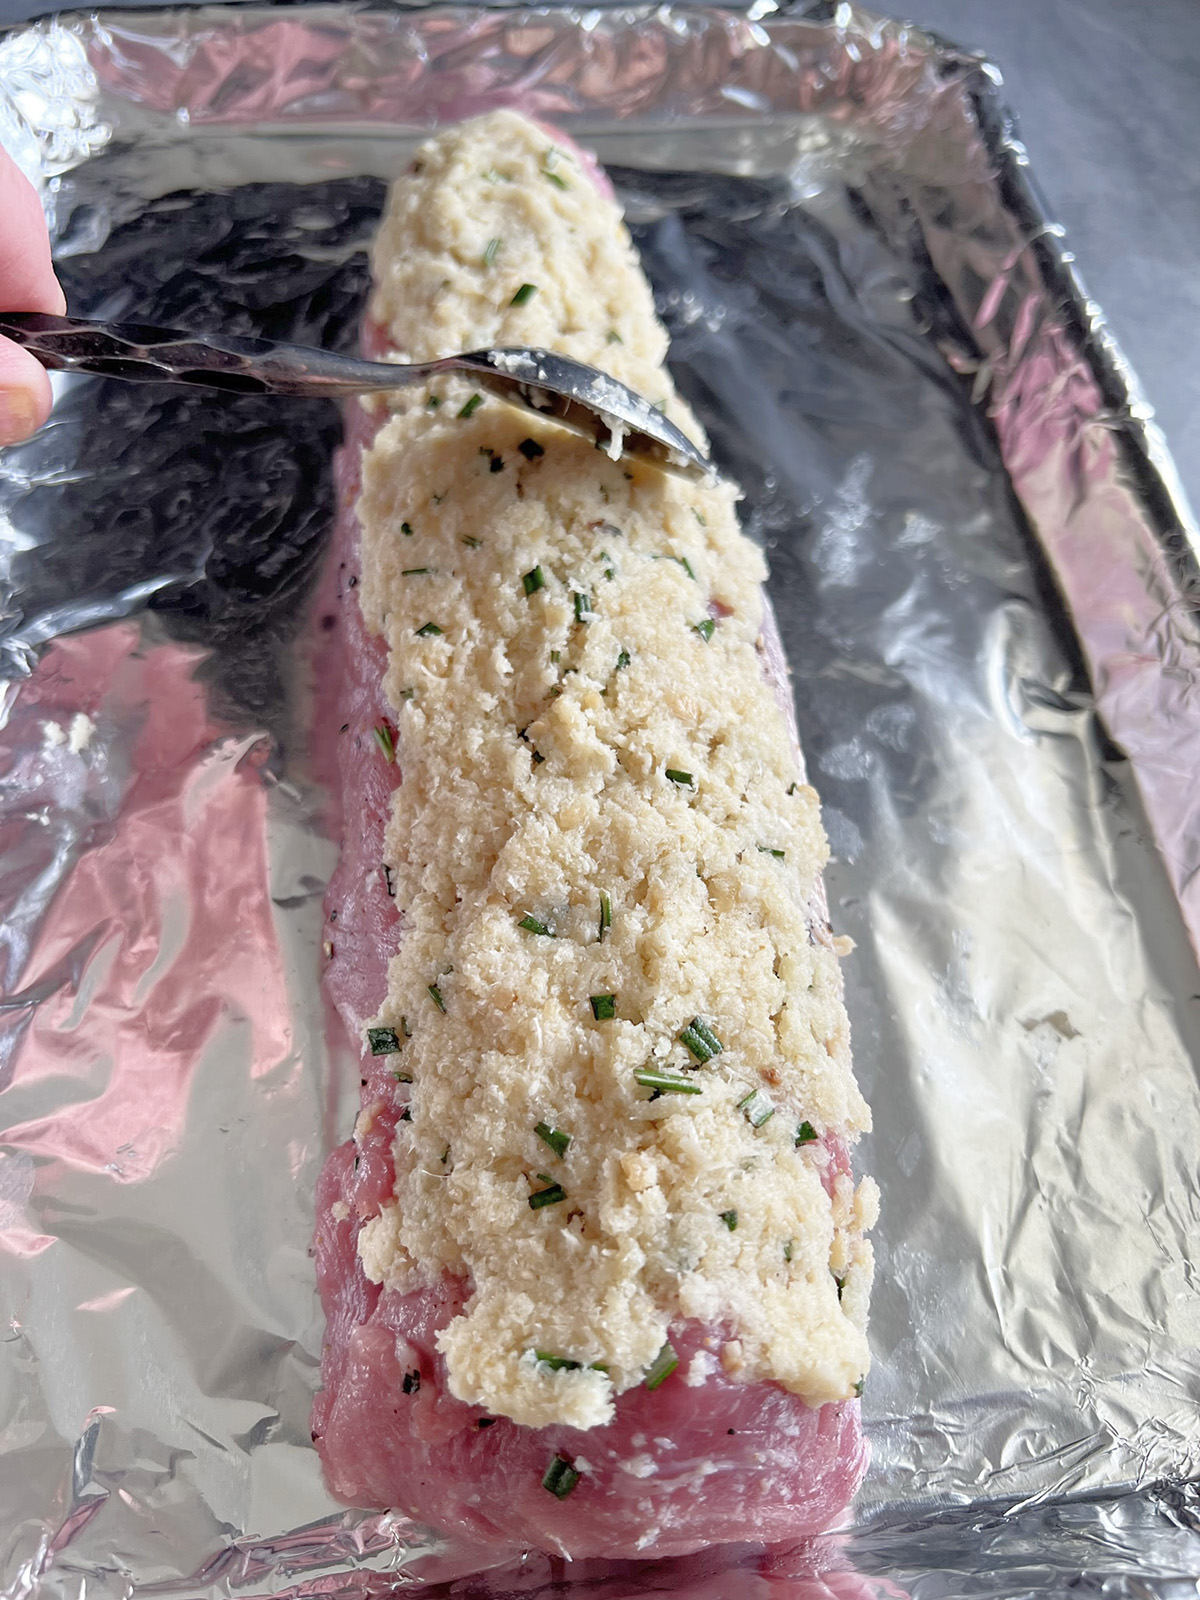 Adding horseradish crust to pork tenderloin